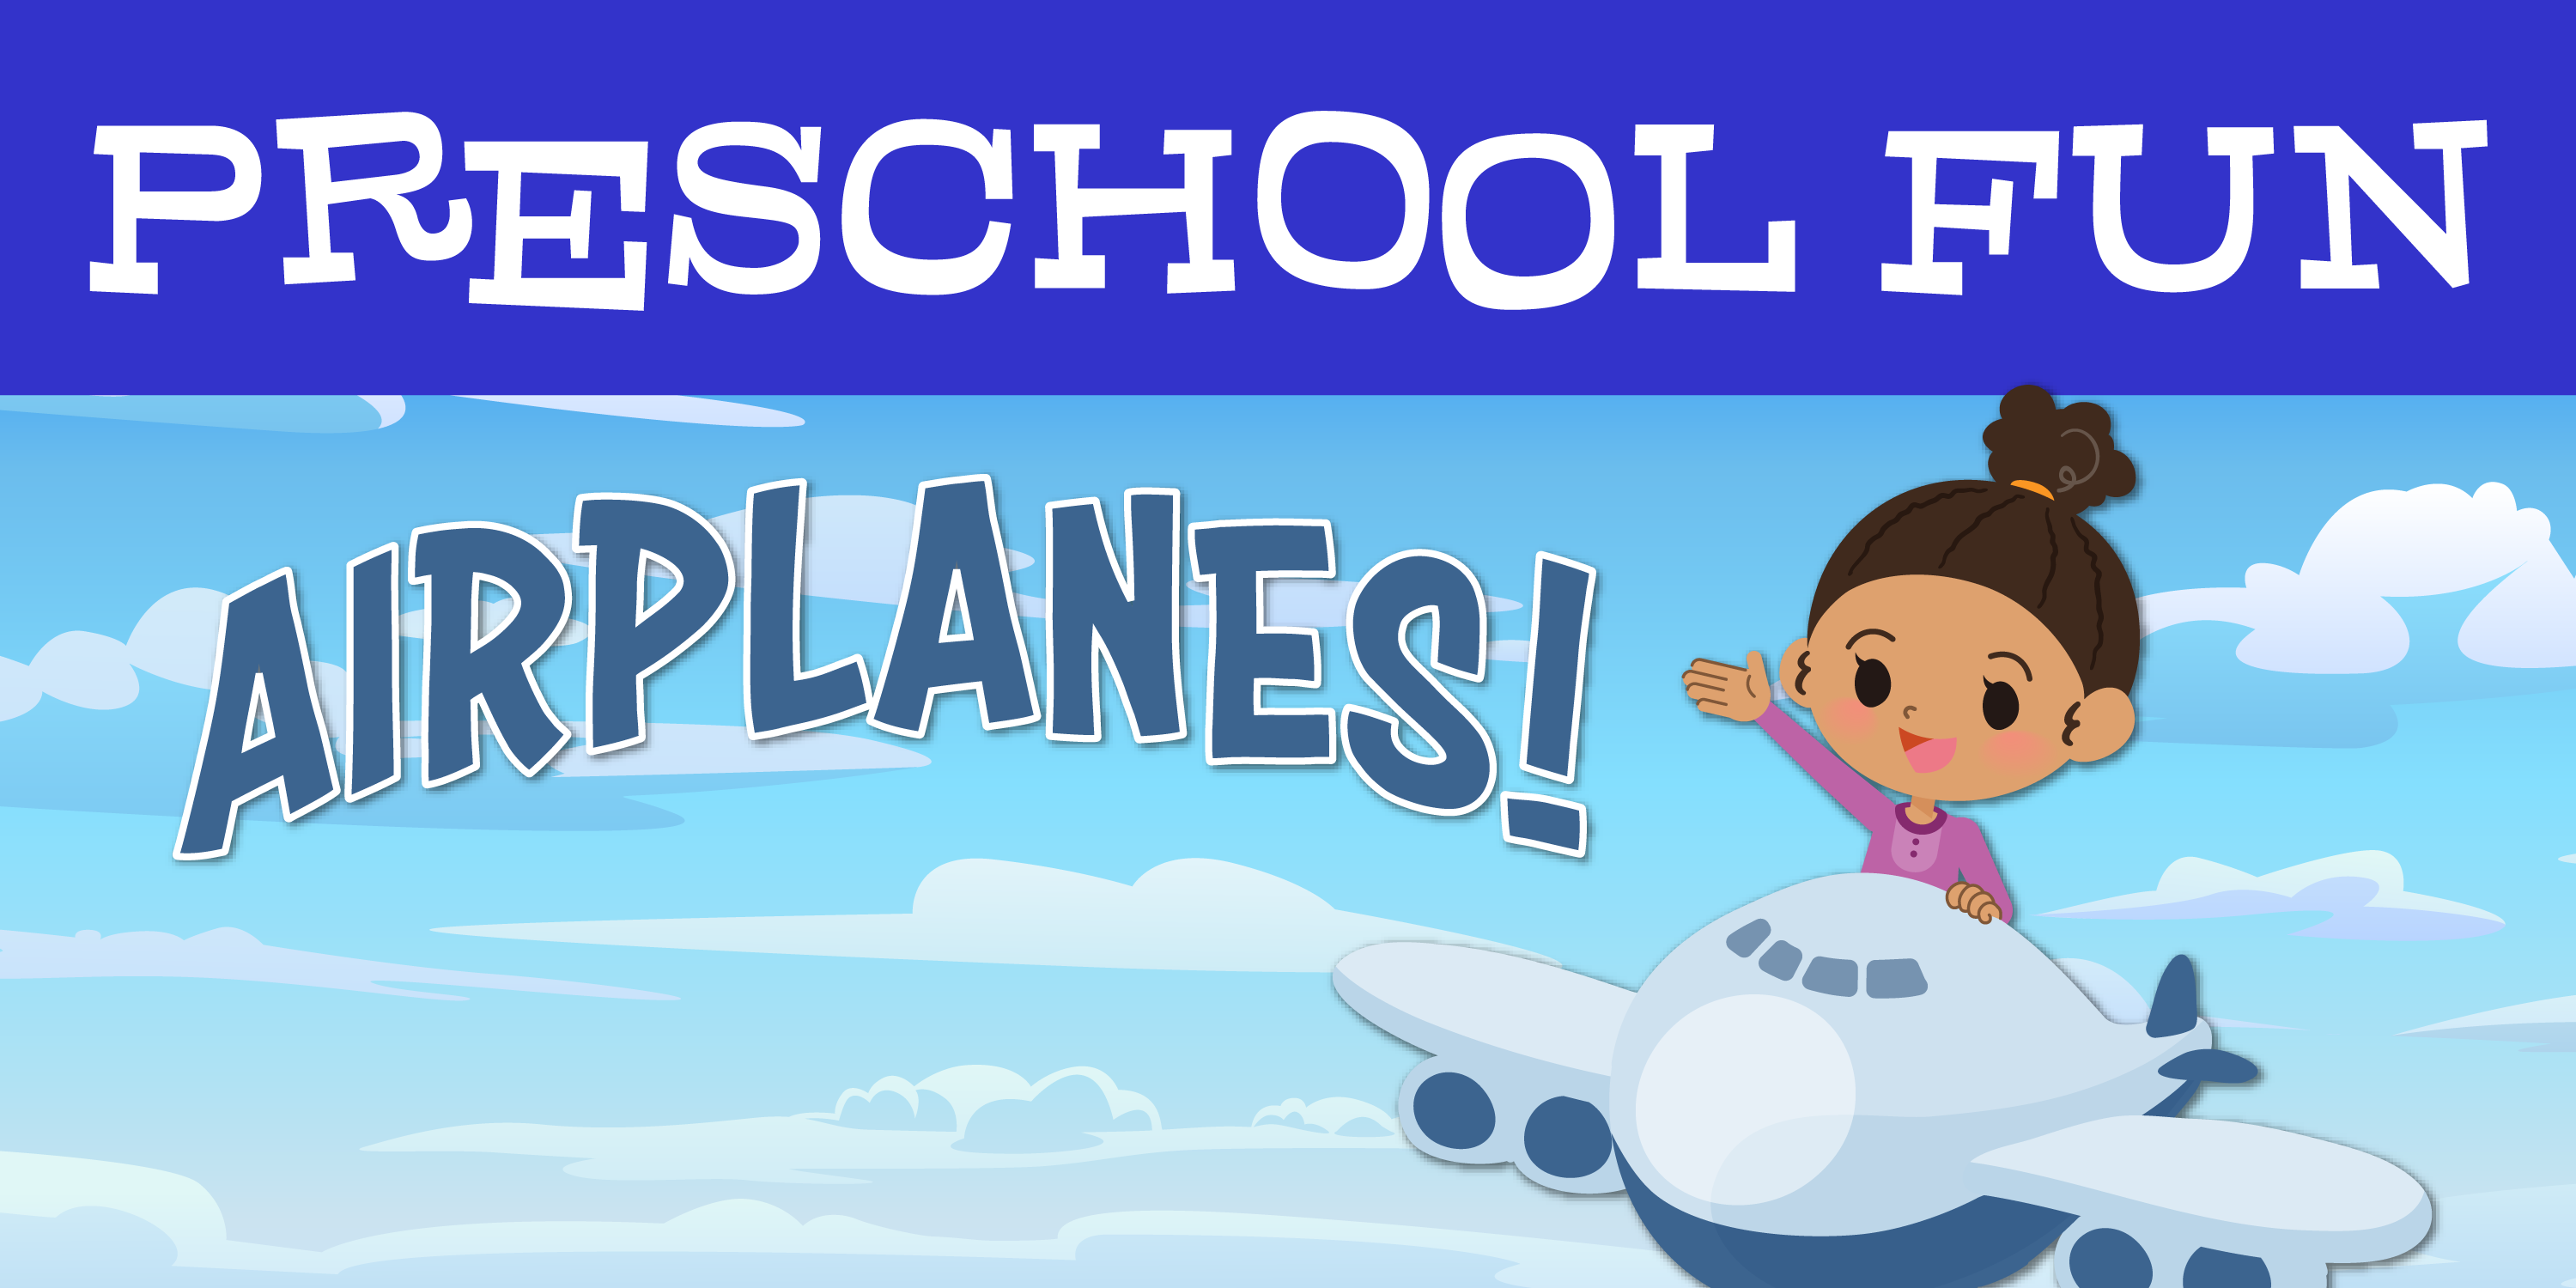 Preschool Fun: Airplanes!